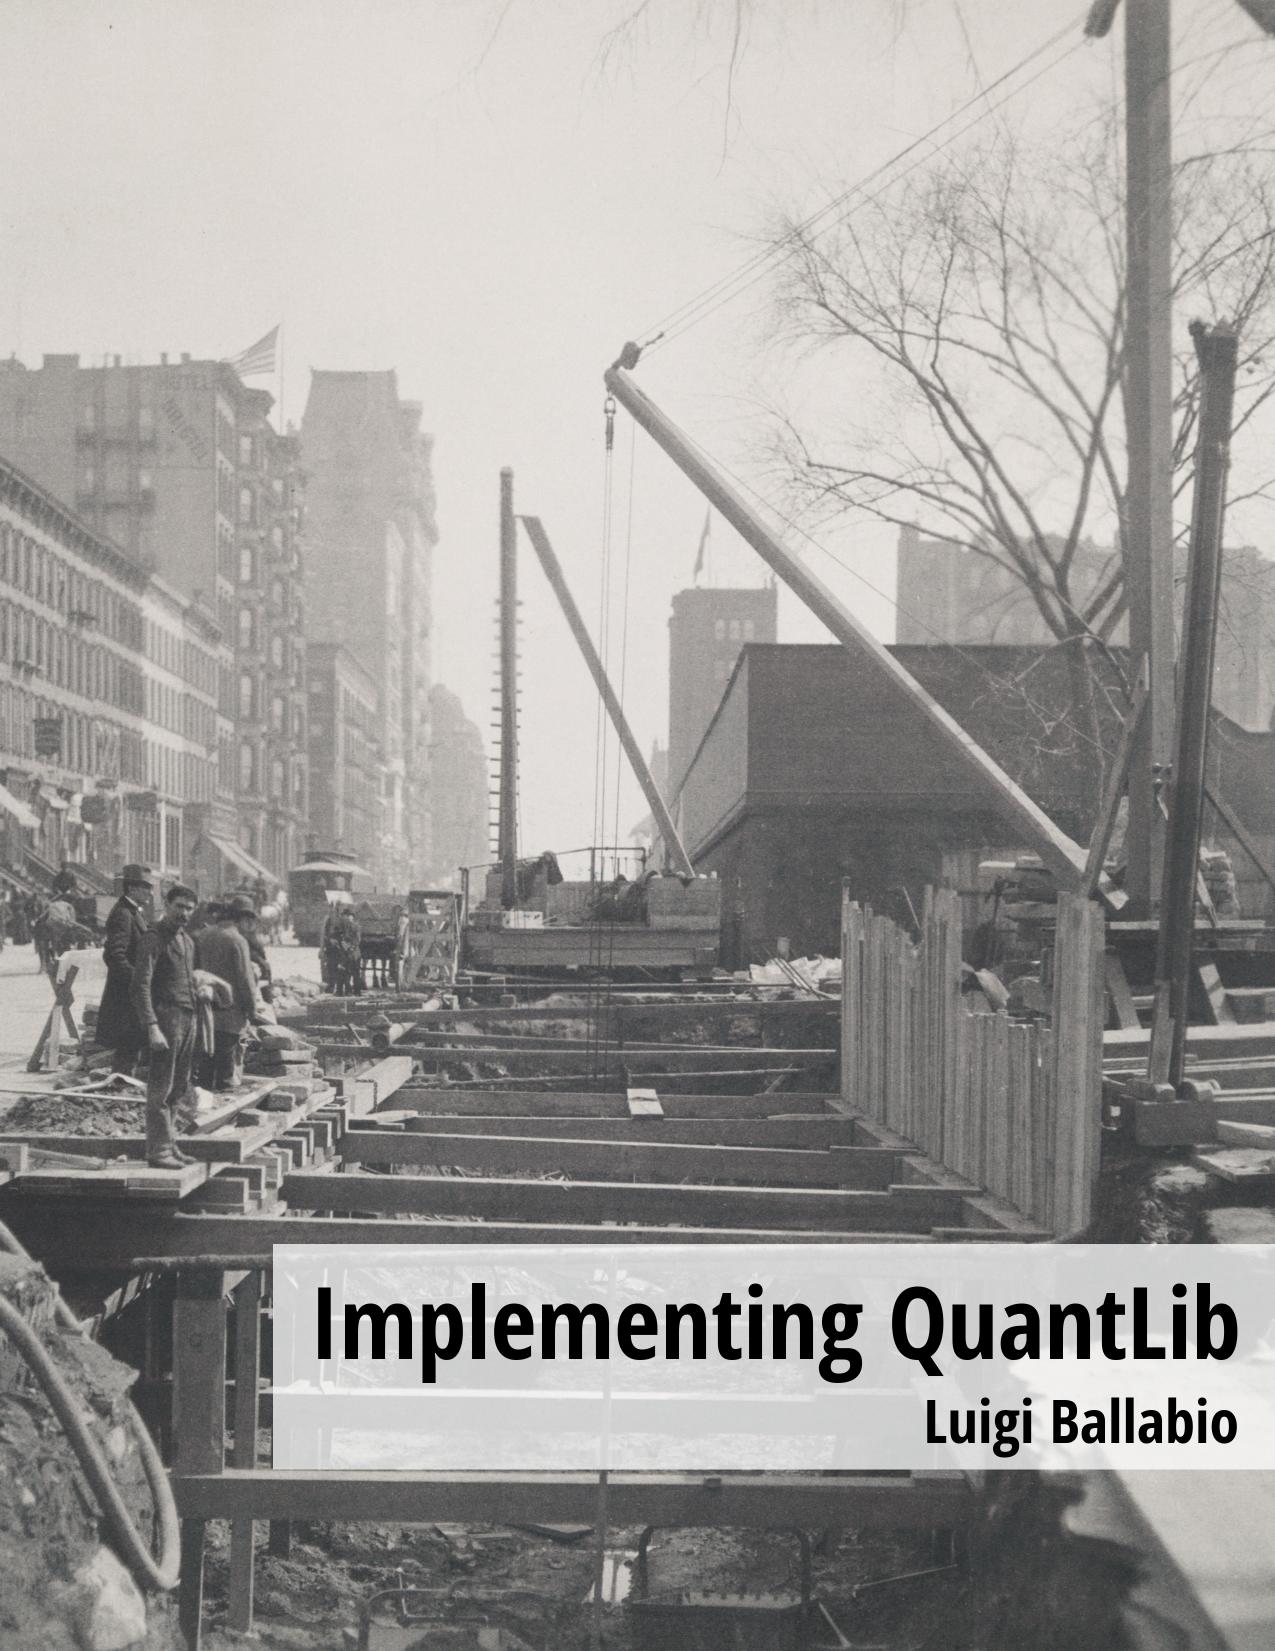 Implementing QuantLib by Luigi Ballabio